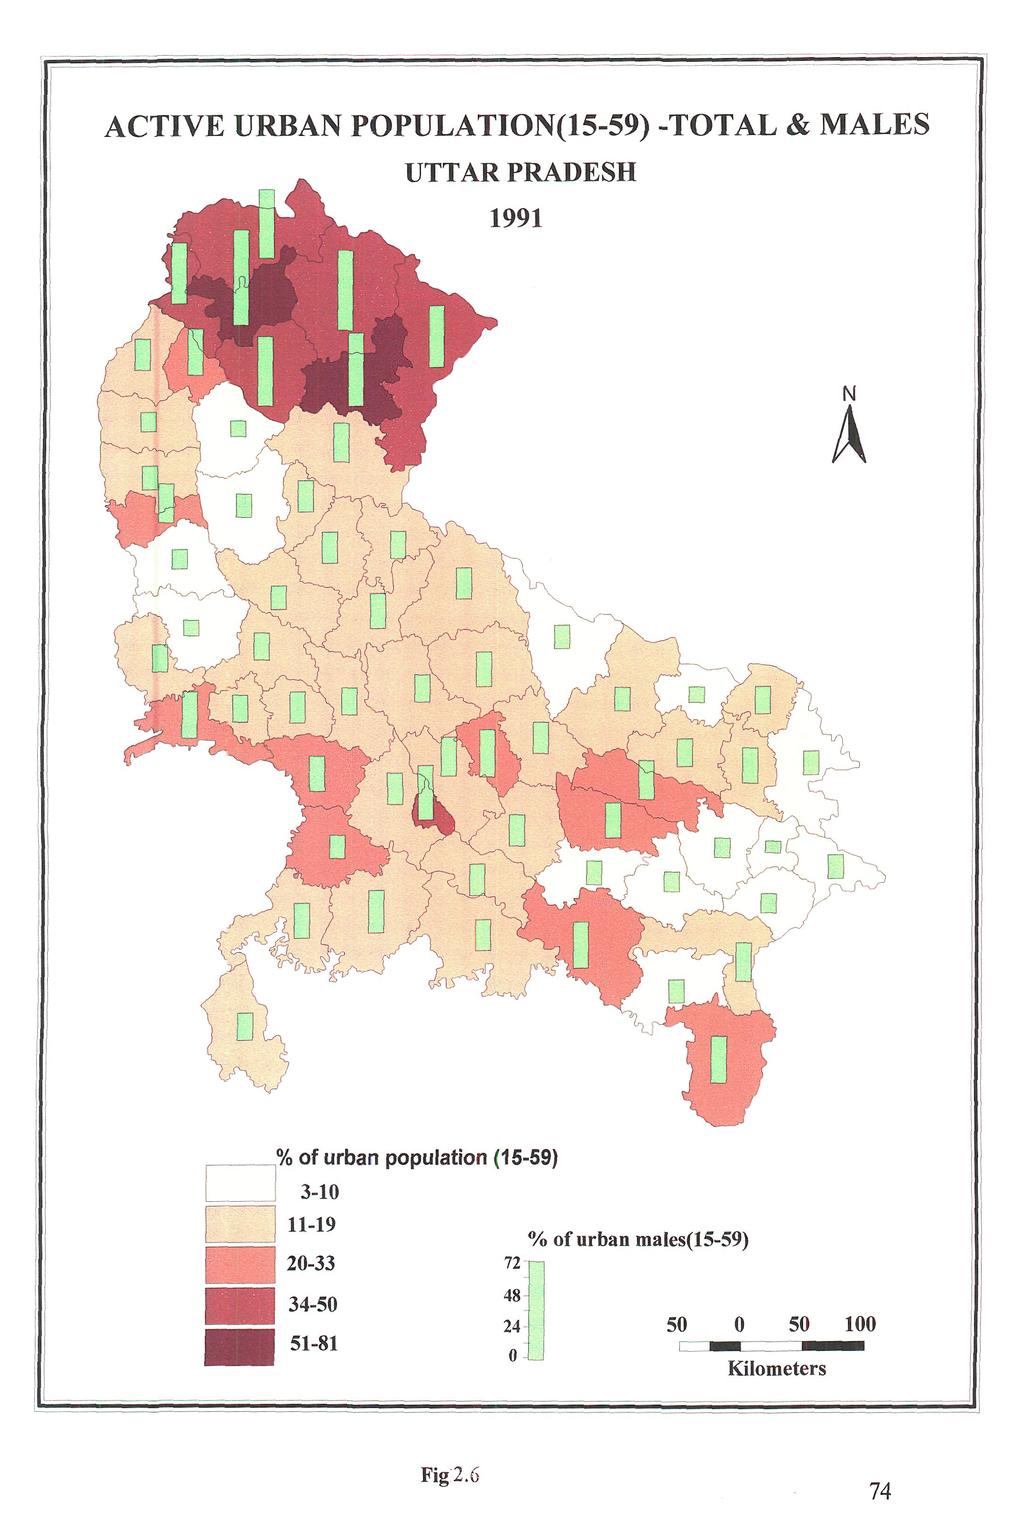 ACTIVE URBAN POPULATION(15-59) -TOTAL & MALES UTTAR PRADESH 1991,% of urban population (15-59)